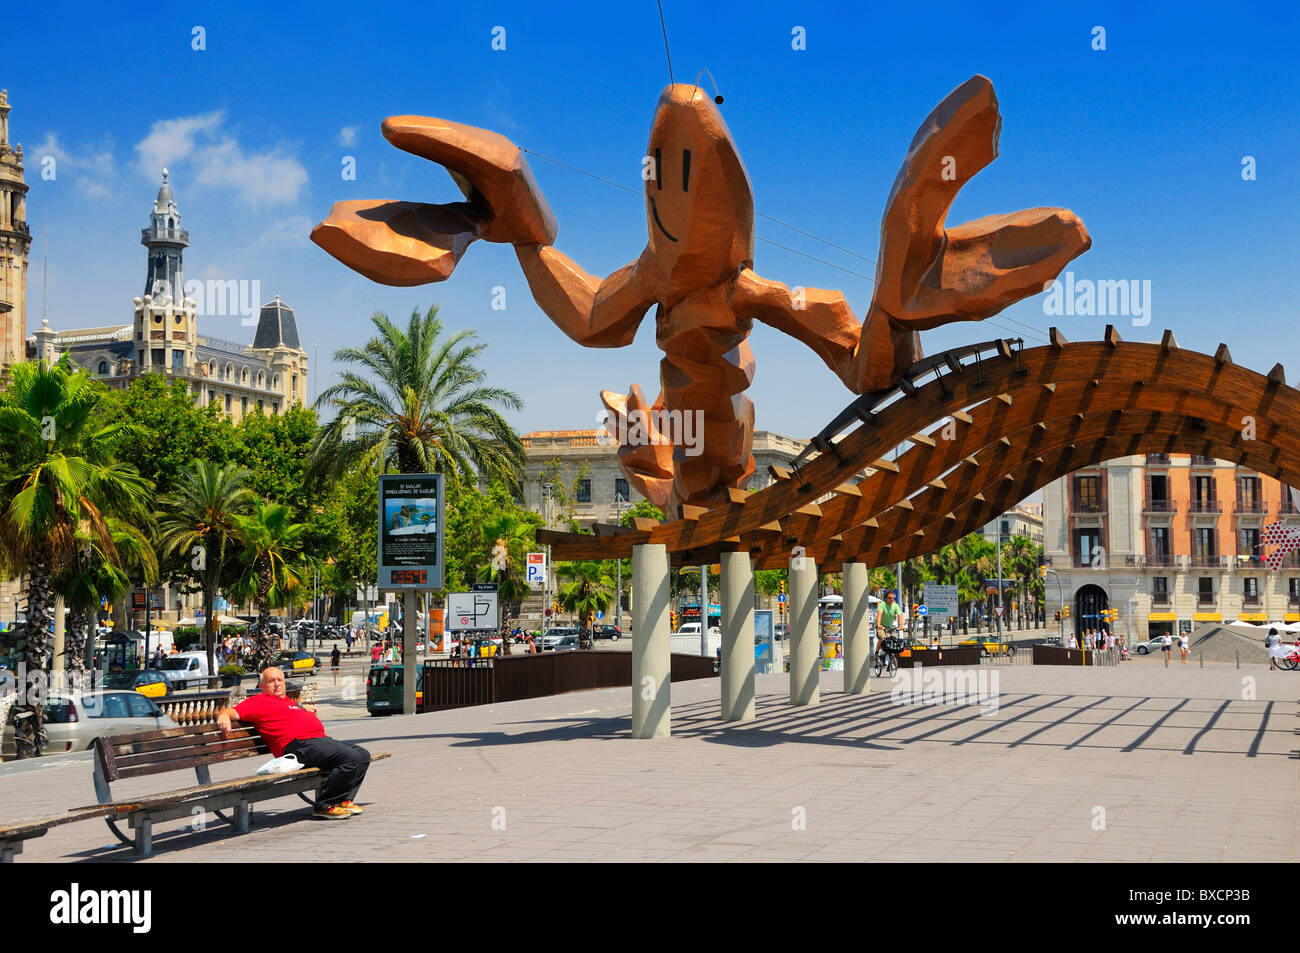 Crab sculpture on the board walk along the Moll de la Fusta (Moll de Bosch i Alsina) in Port Vell, Barcelona, Spain. Stock Photo